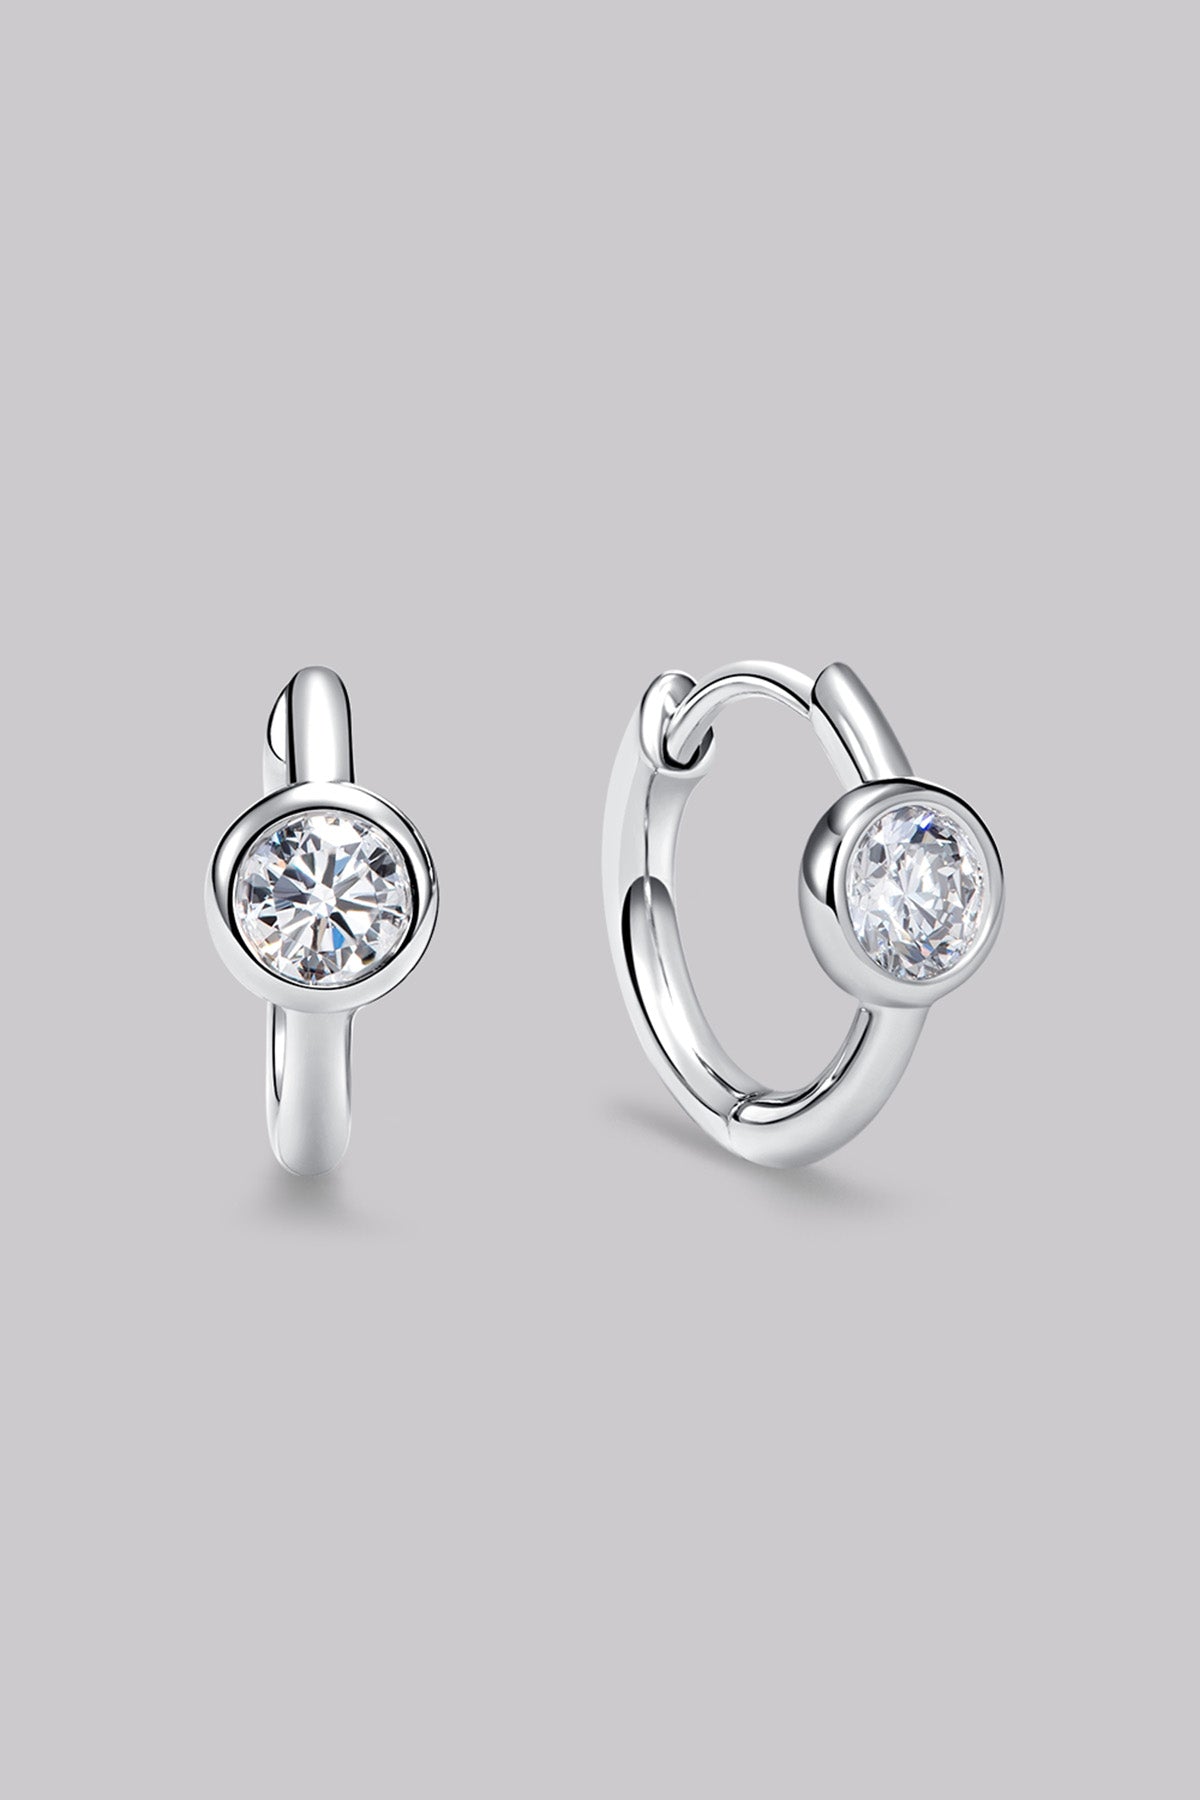 Round Diamond Huggie Earrings (0.28ct)